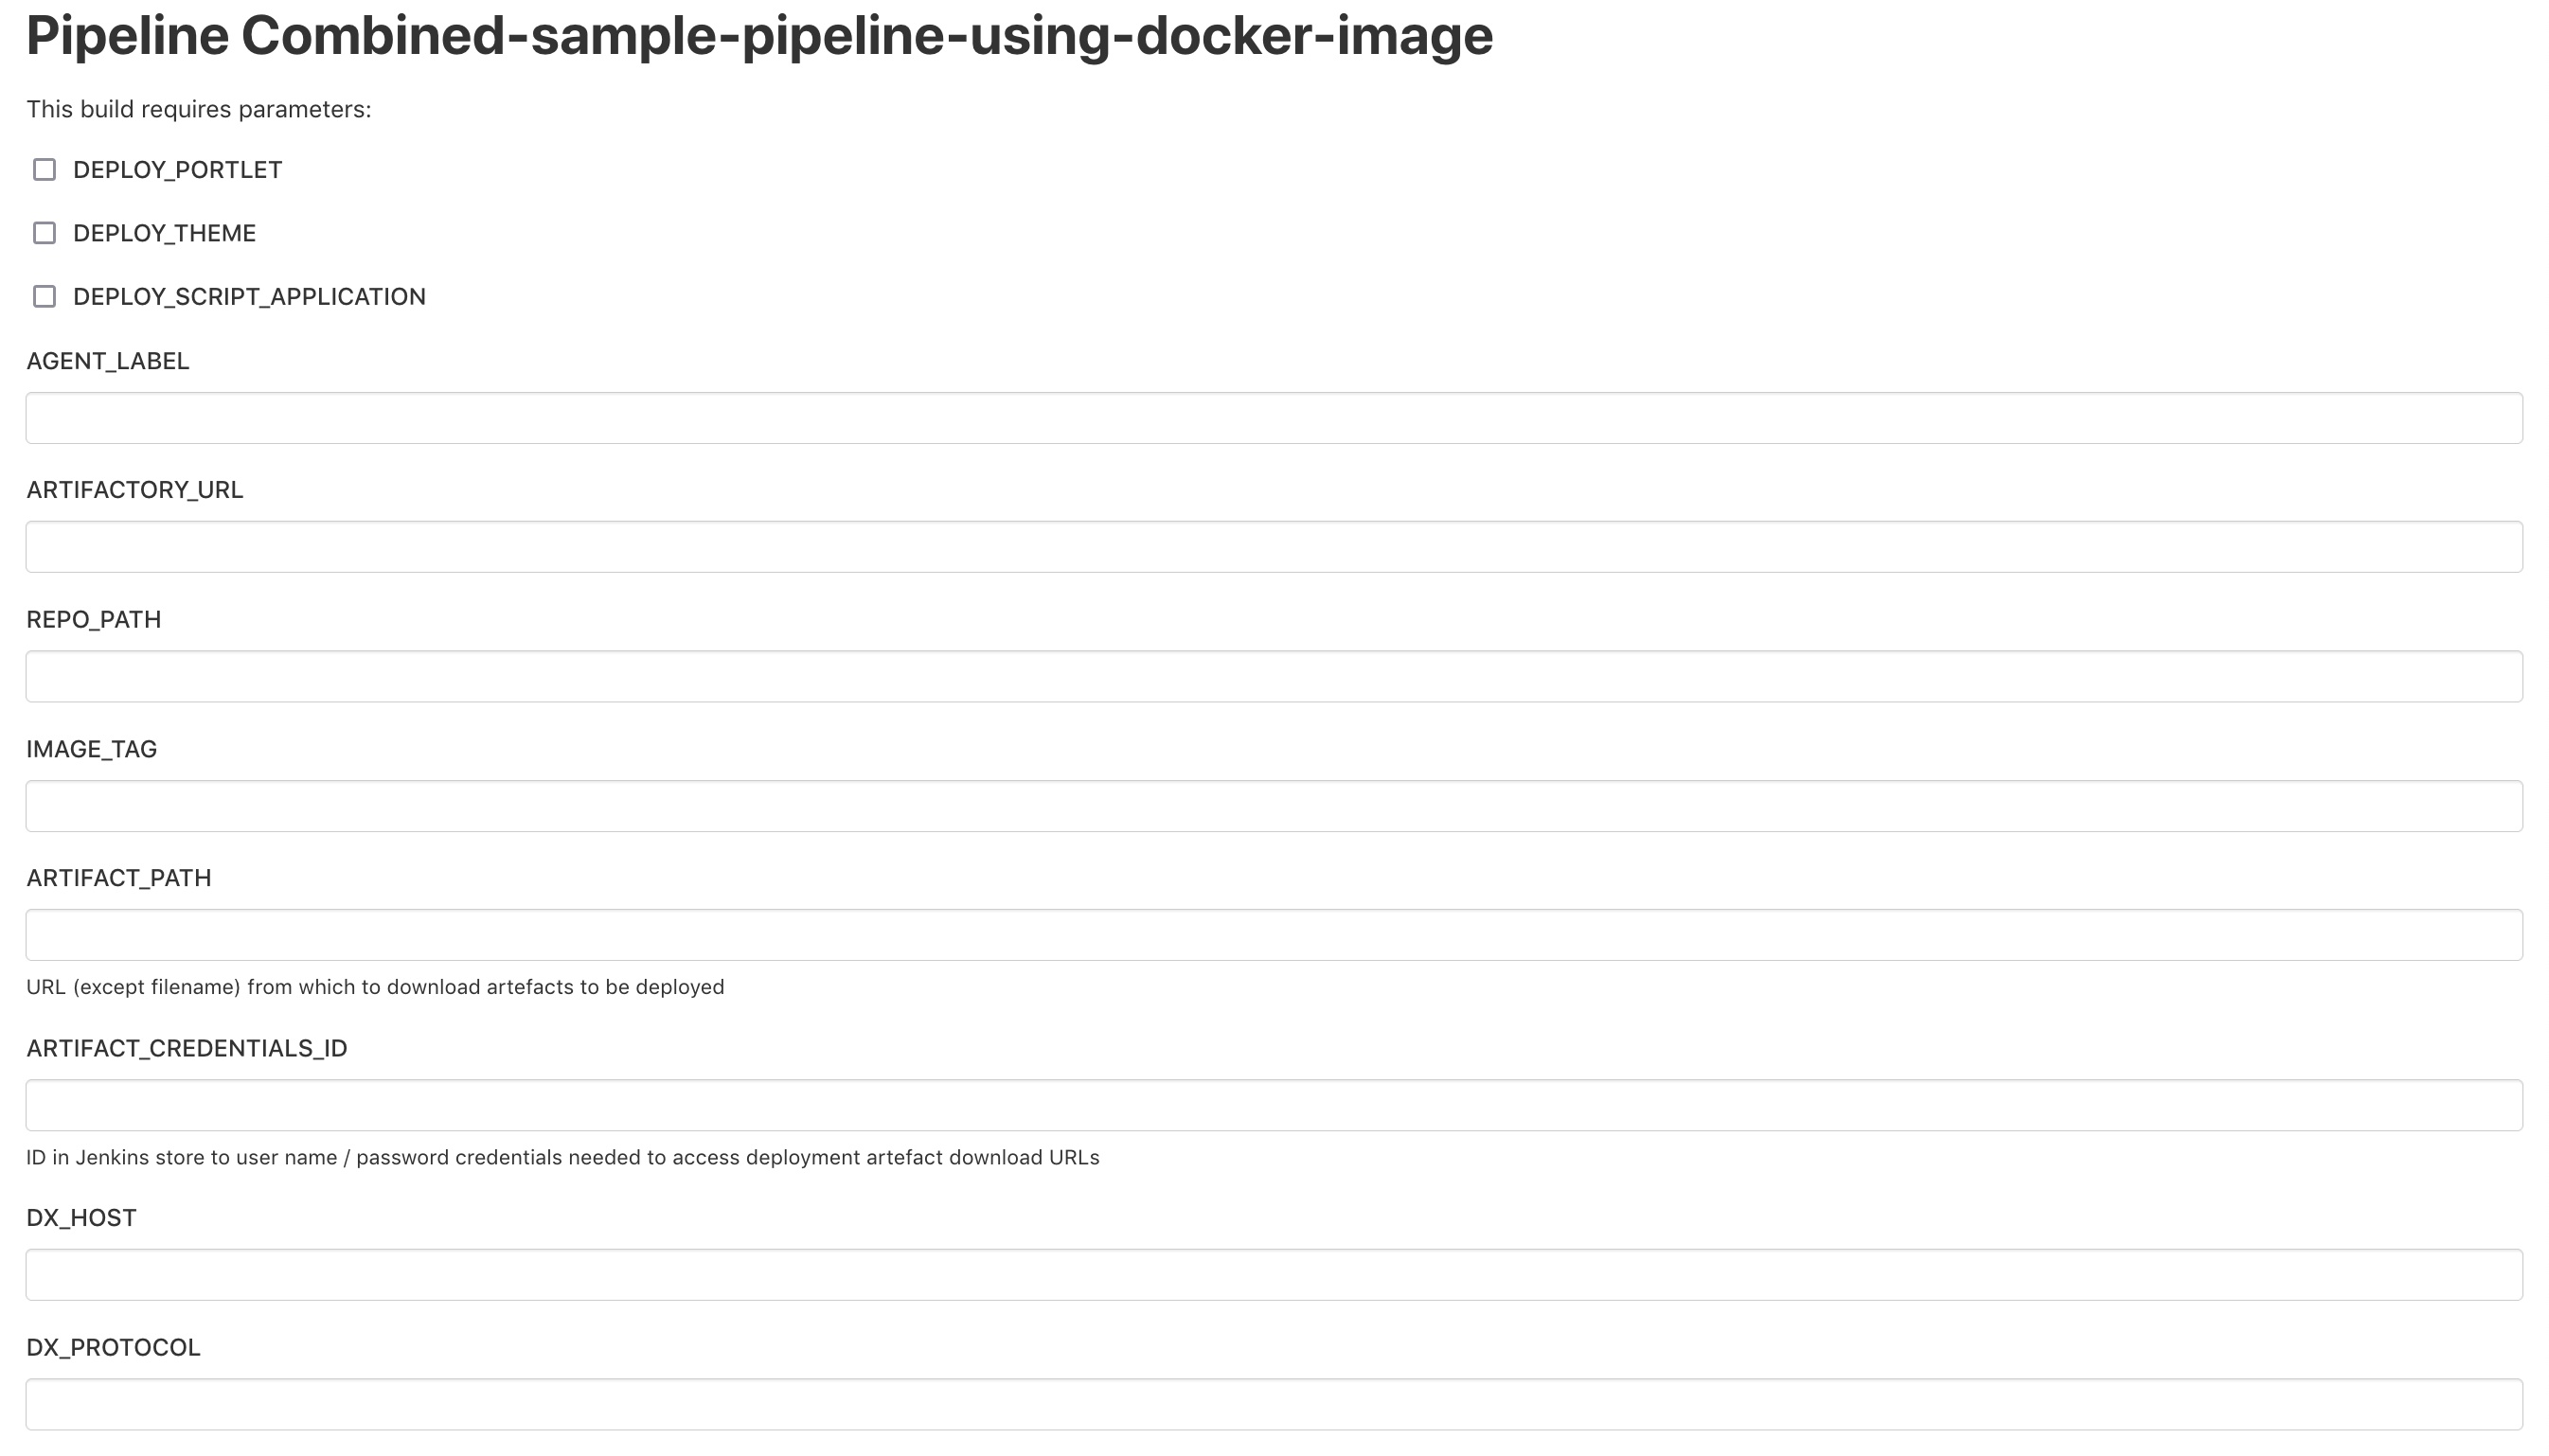 Sample pipeline for the DXClient Docker image file